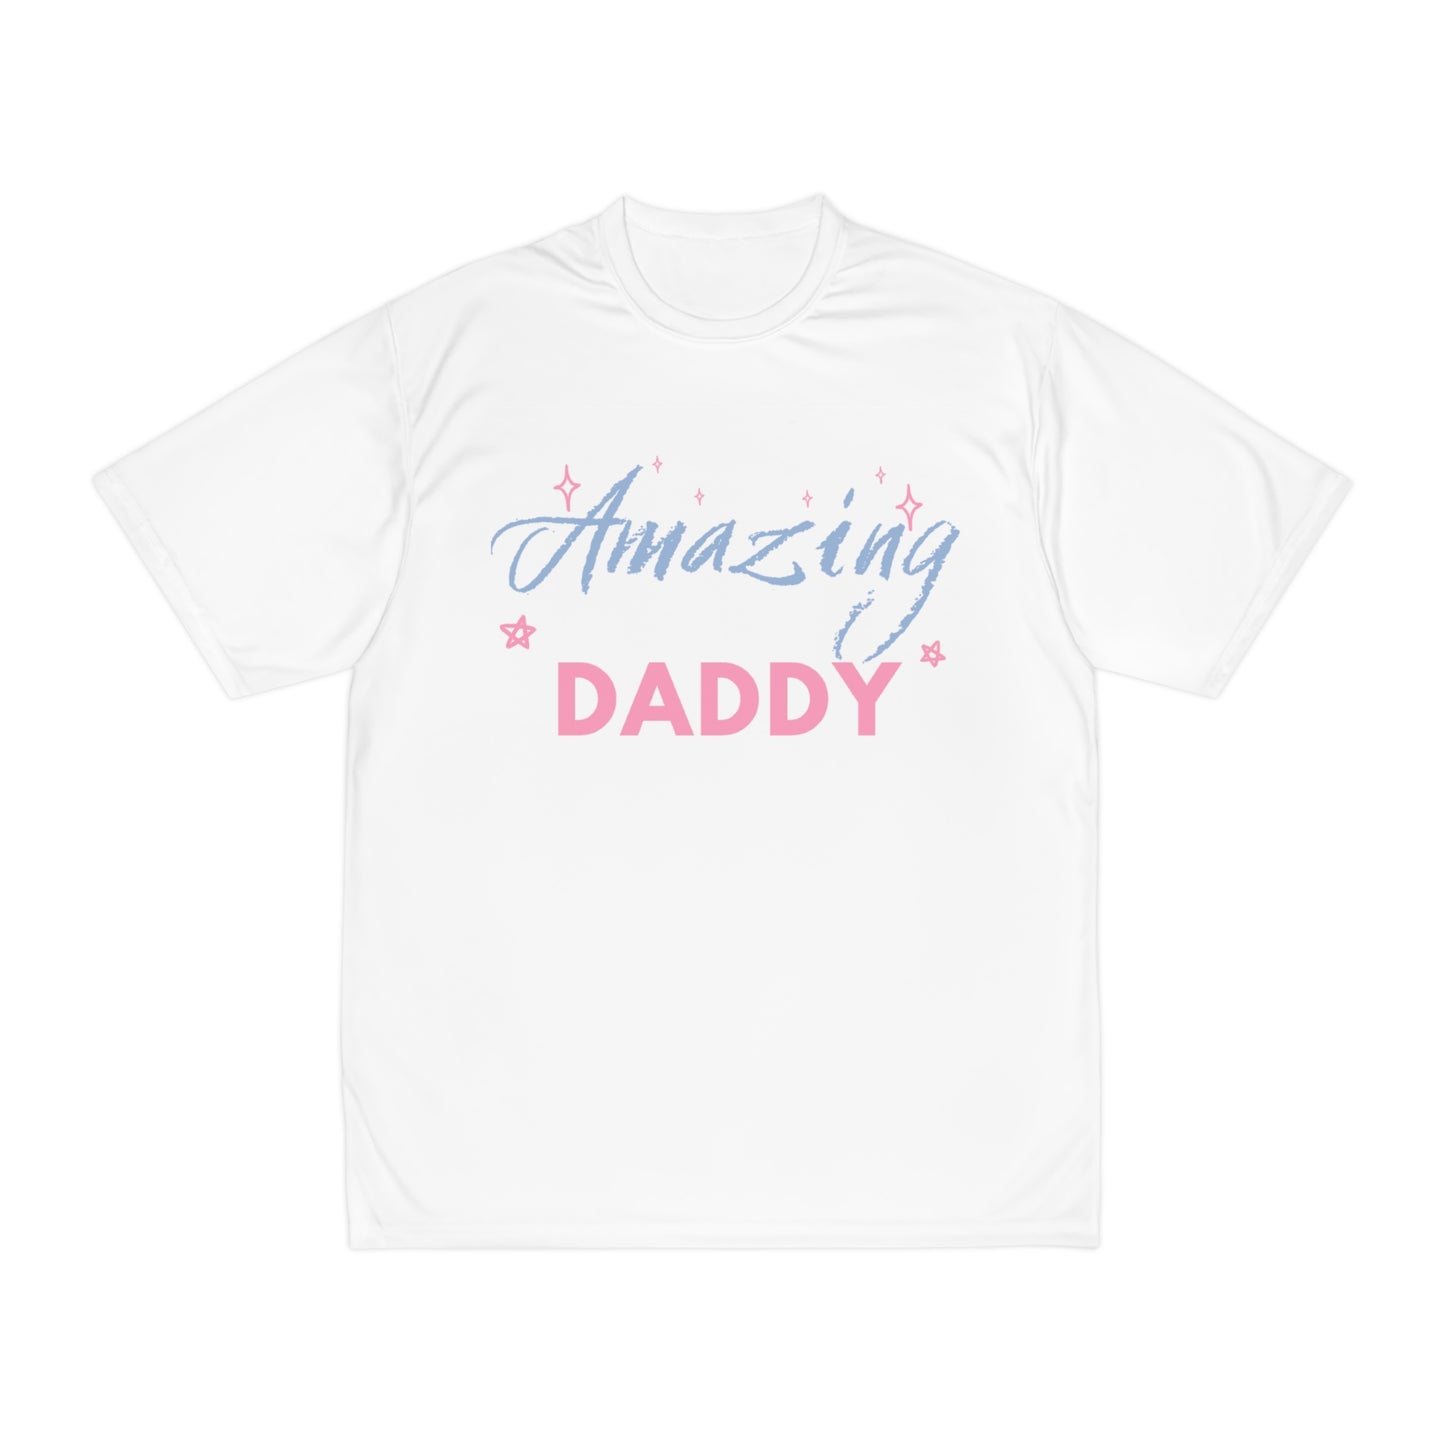 Amazing Daddy Men's Performance T-Shirt